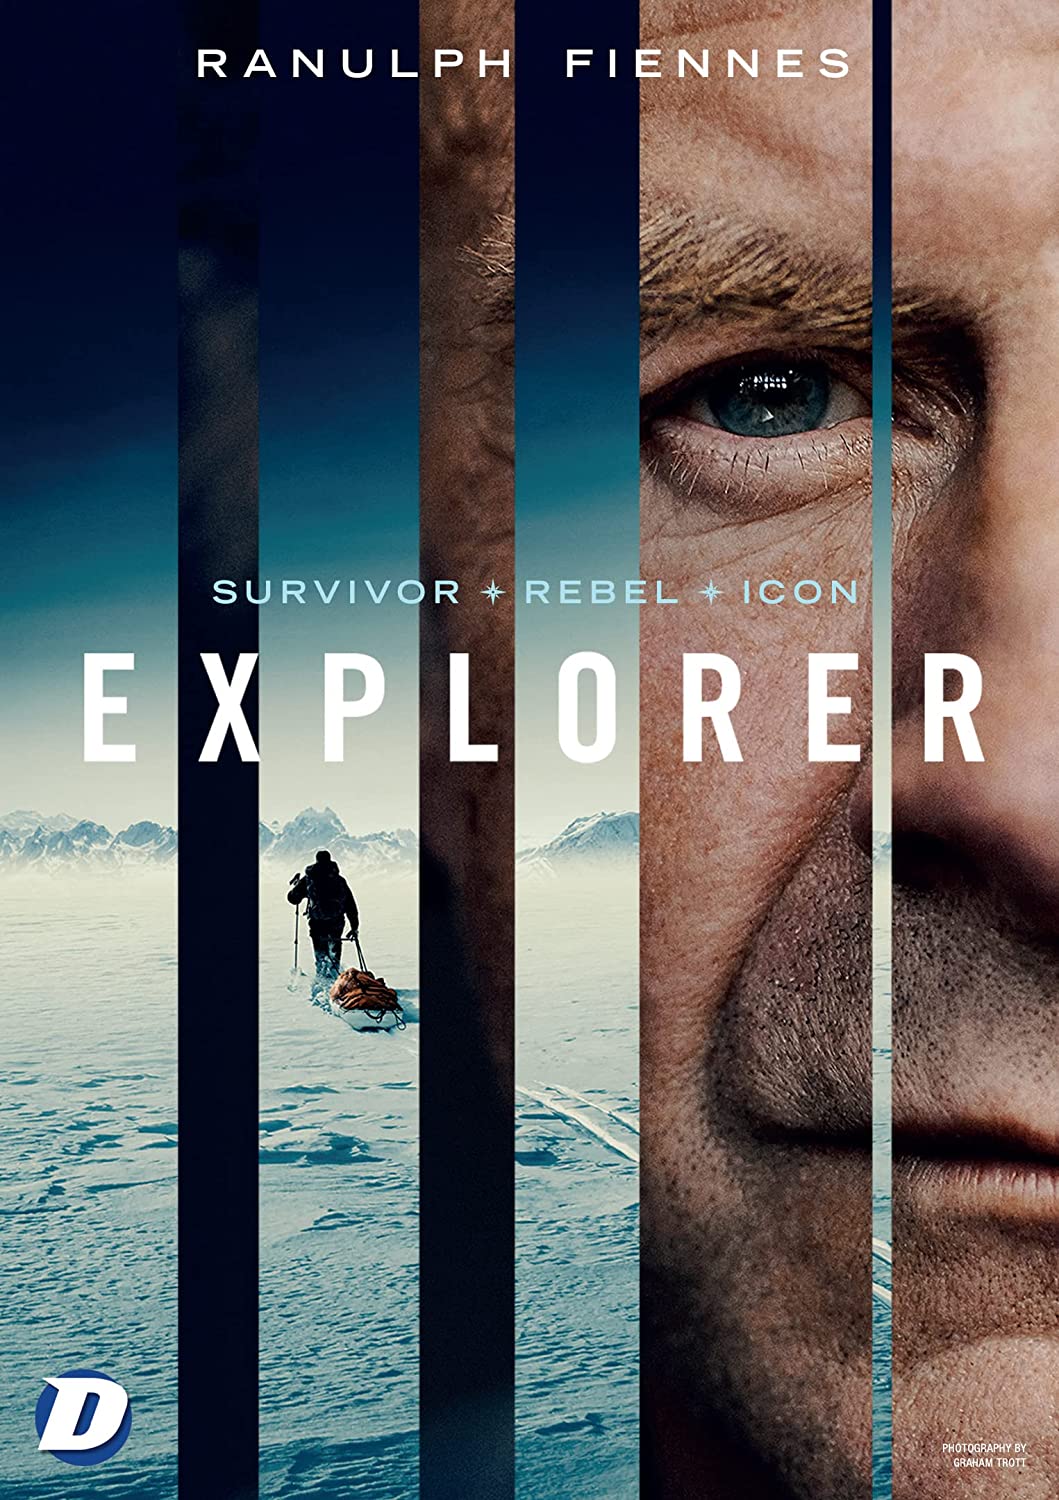 Explorer: Ranulph Fiennes - Survivor, Rebel, Icon [DVD]